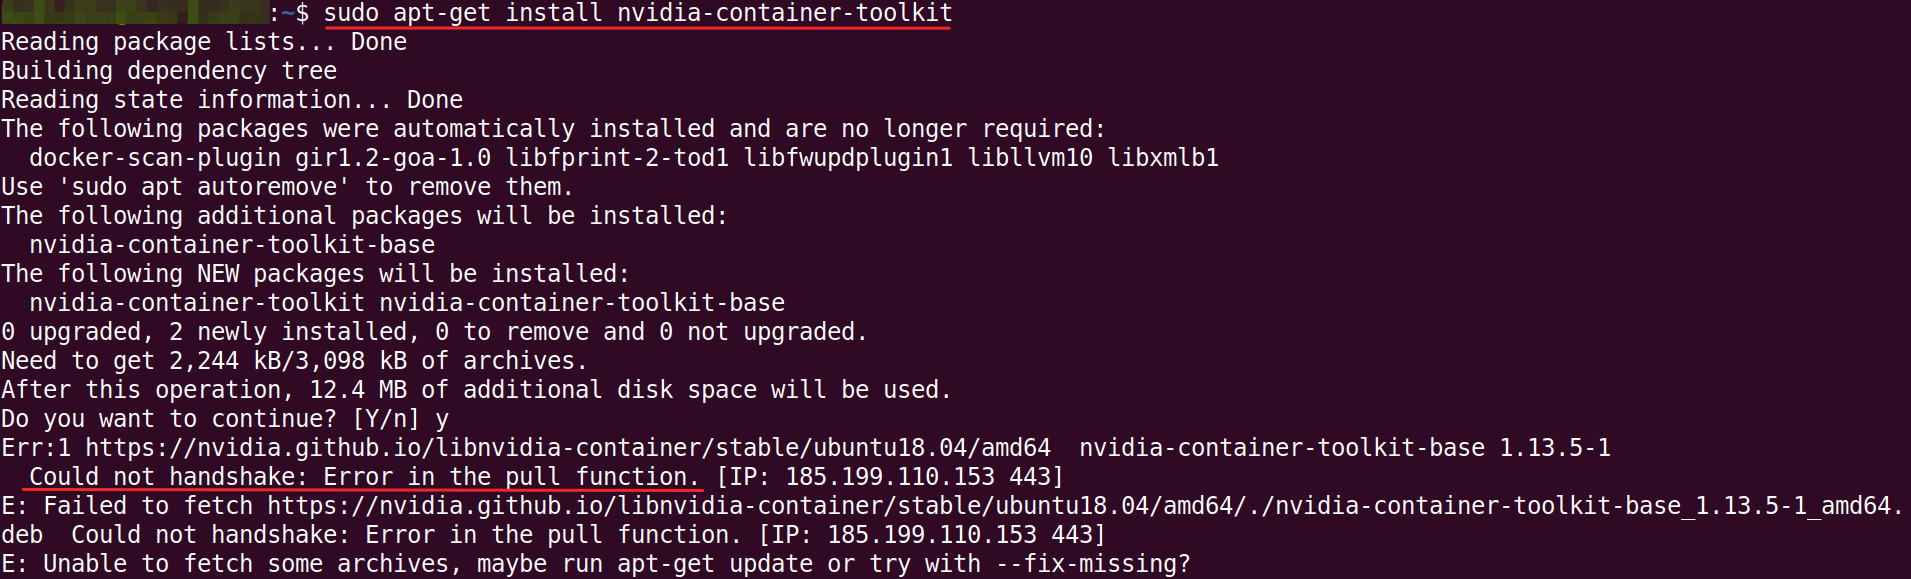 Ubuntu20.04开机黑屏左上角光标闪烁，以及移除Nvidia驱动后造成的无法启动docker容器问题Error response from daemon: could not select device driver &quot;&quot; with capabilities: [[gpu]]